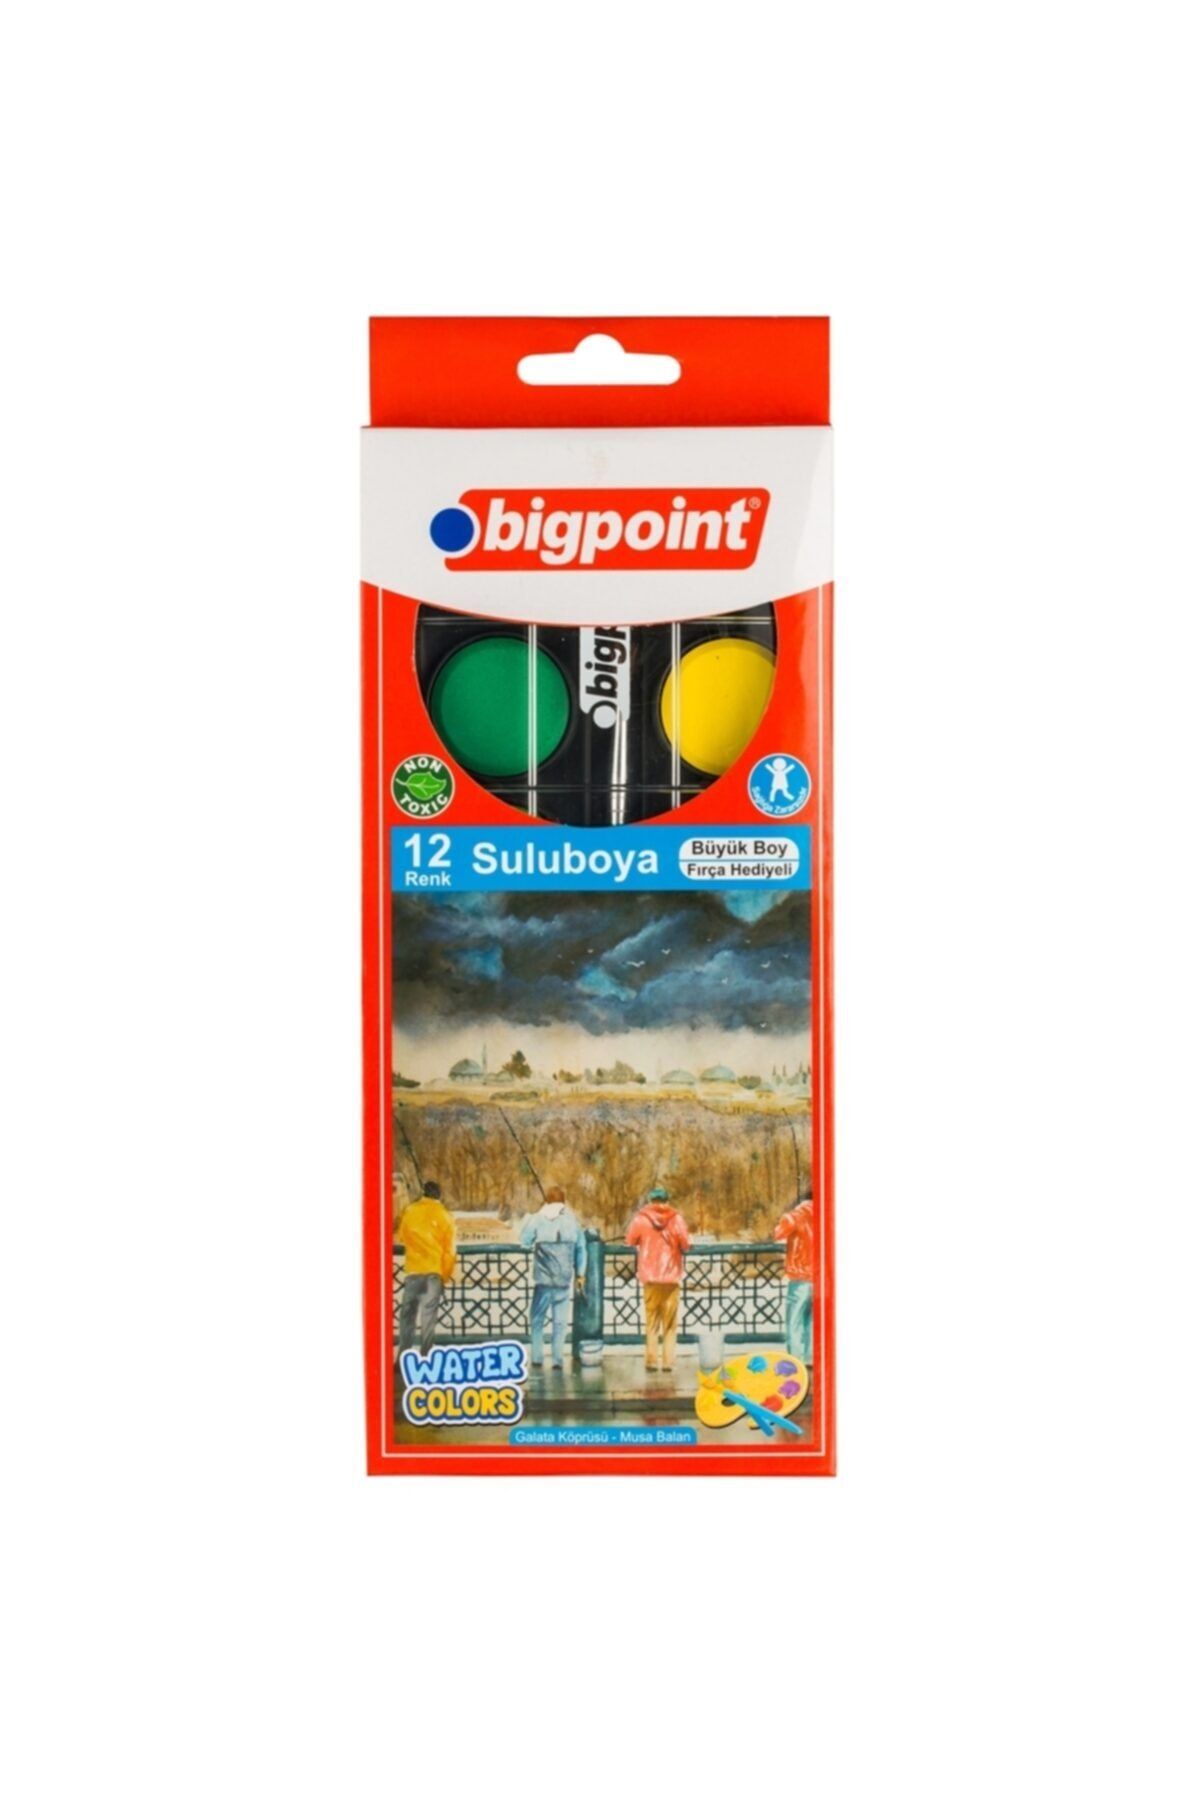 Bigpoint Suluboya 12 Renk - Büyük Boy 12'li Paket